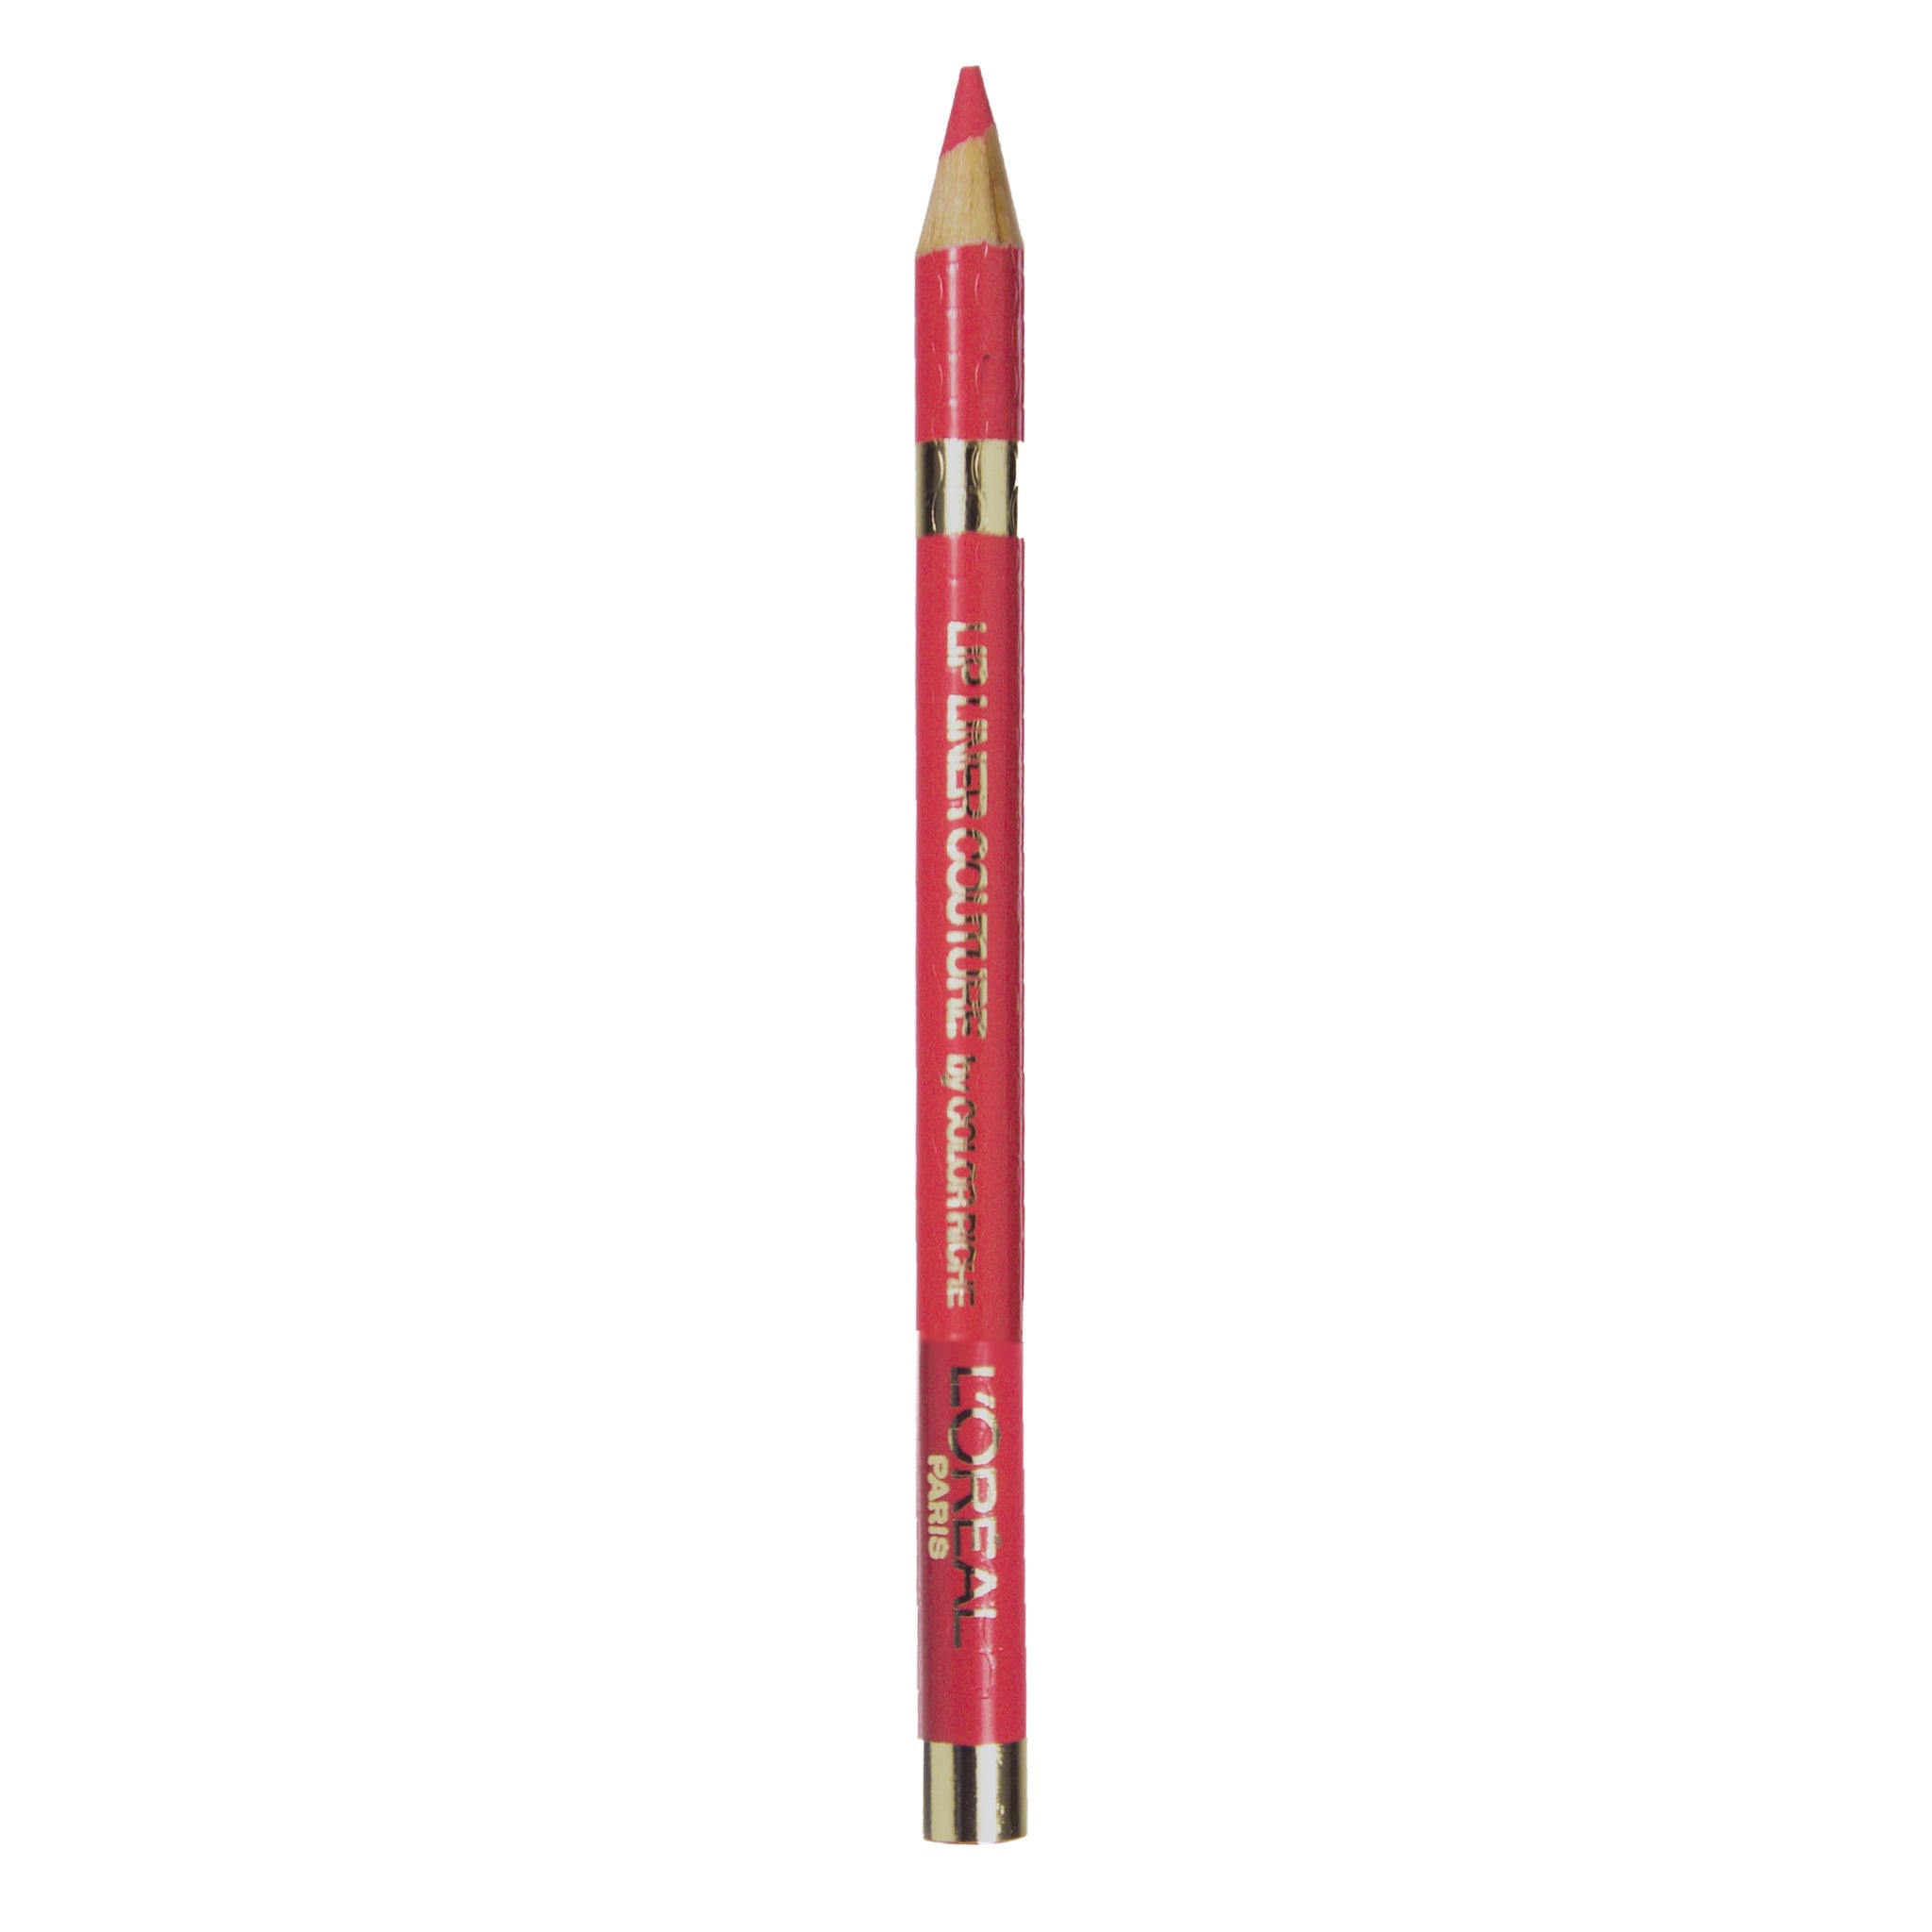 L'Oreal Color Riche Lip Liner Couture - 461 Scarlet Rouge